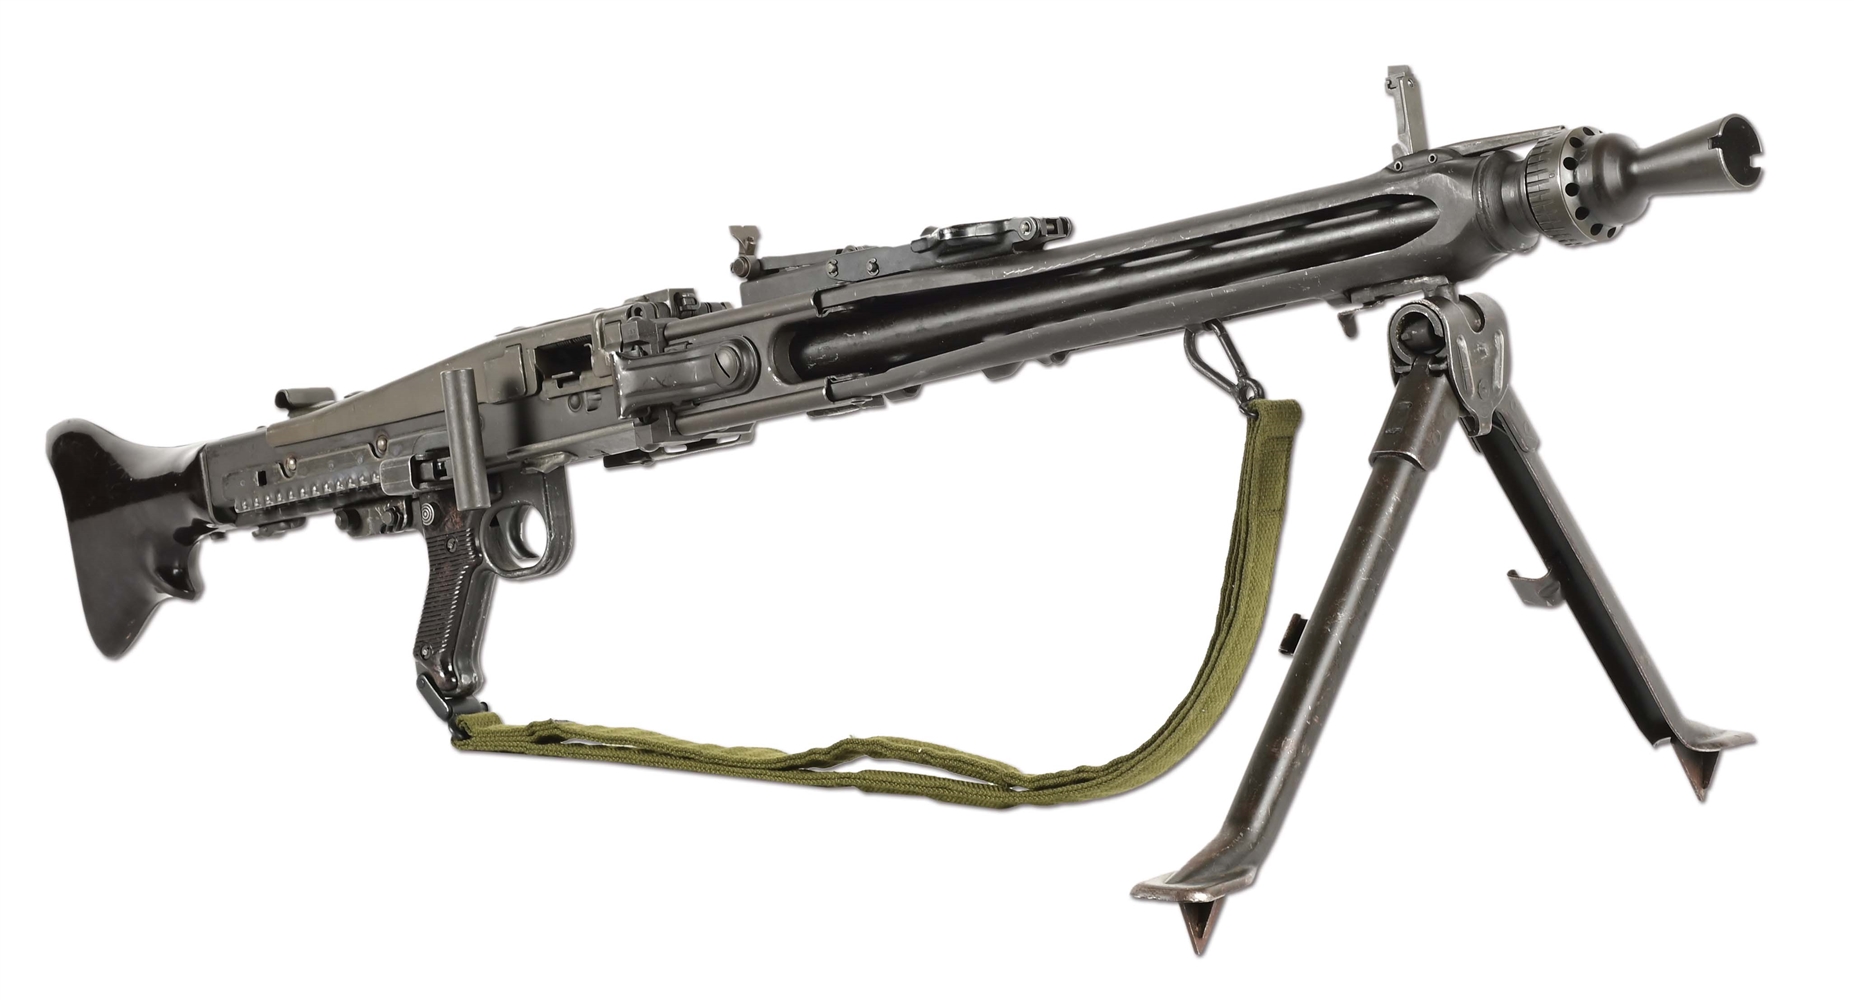 (N) TREMENDOUS ORIGINAL RHEINMETTAL MANUFACTURED WEST GERMAN MG 3 MACHINE GUN (FULLY TRANSFERABLE).